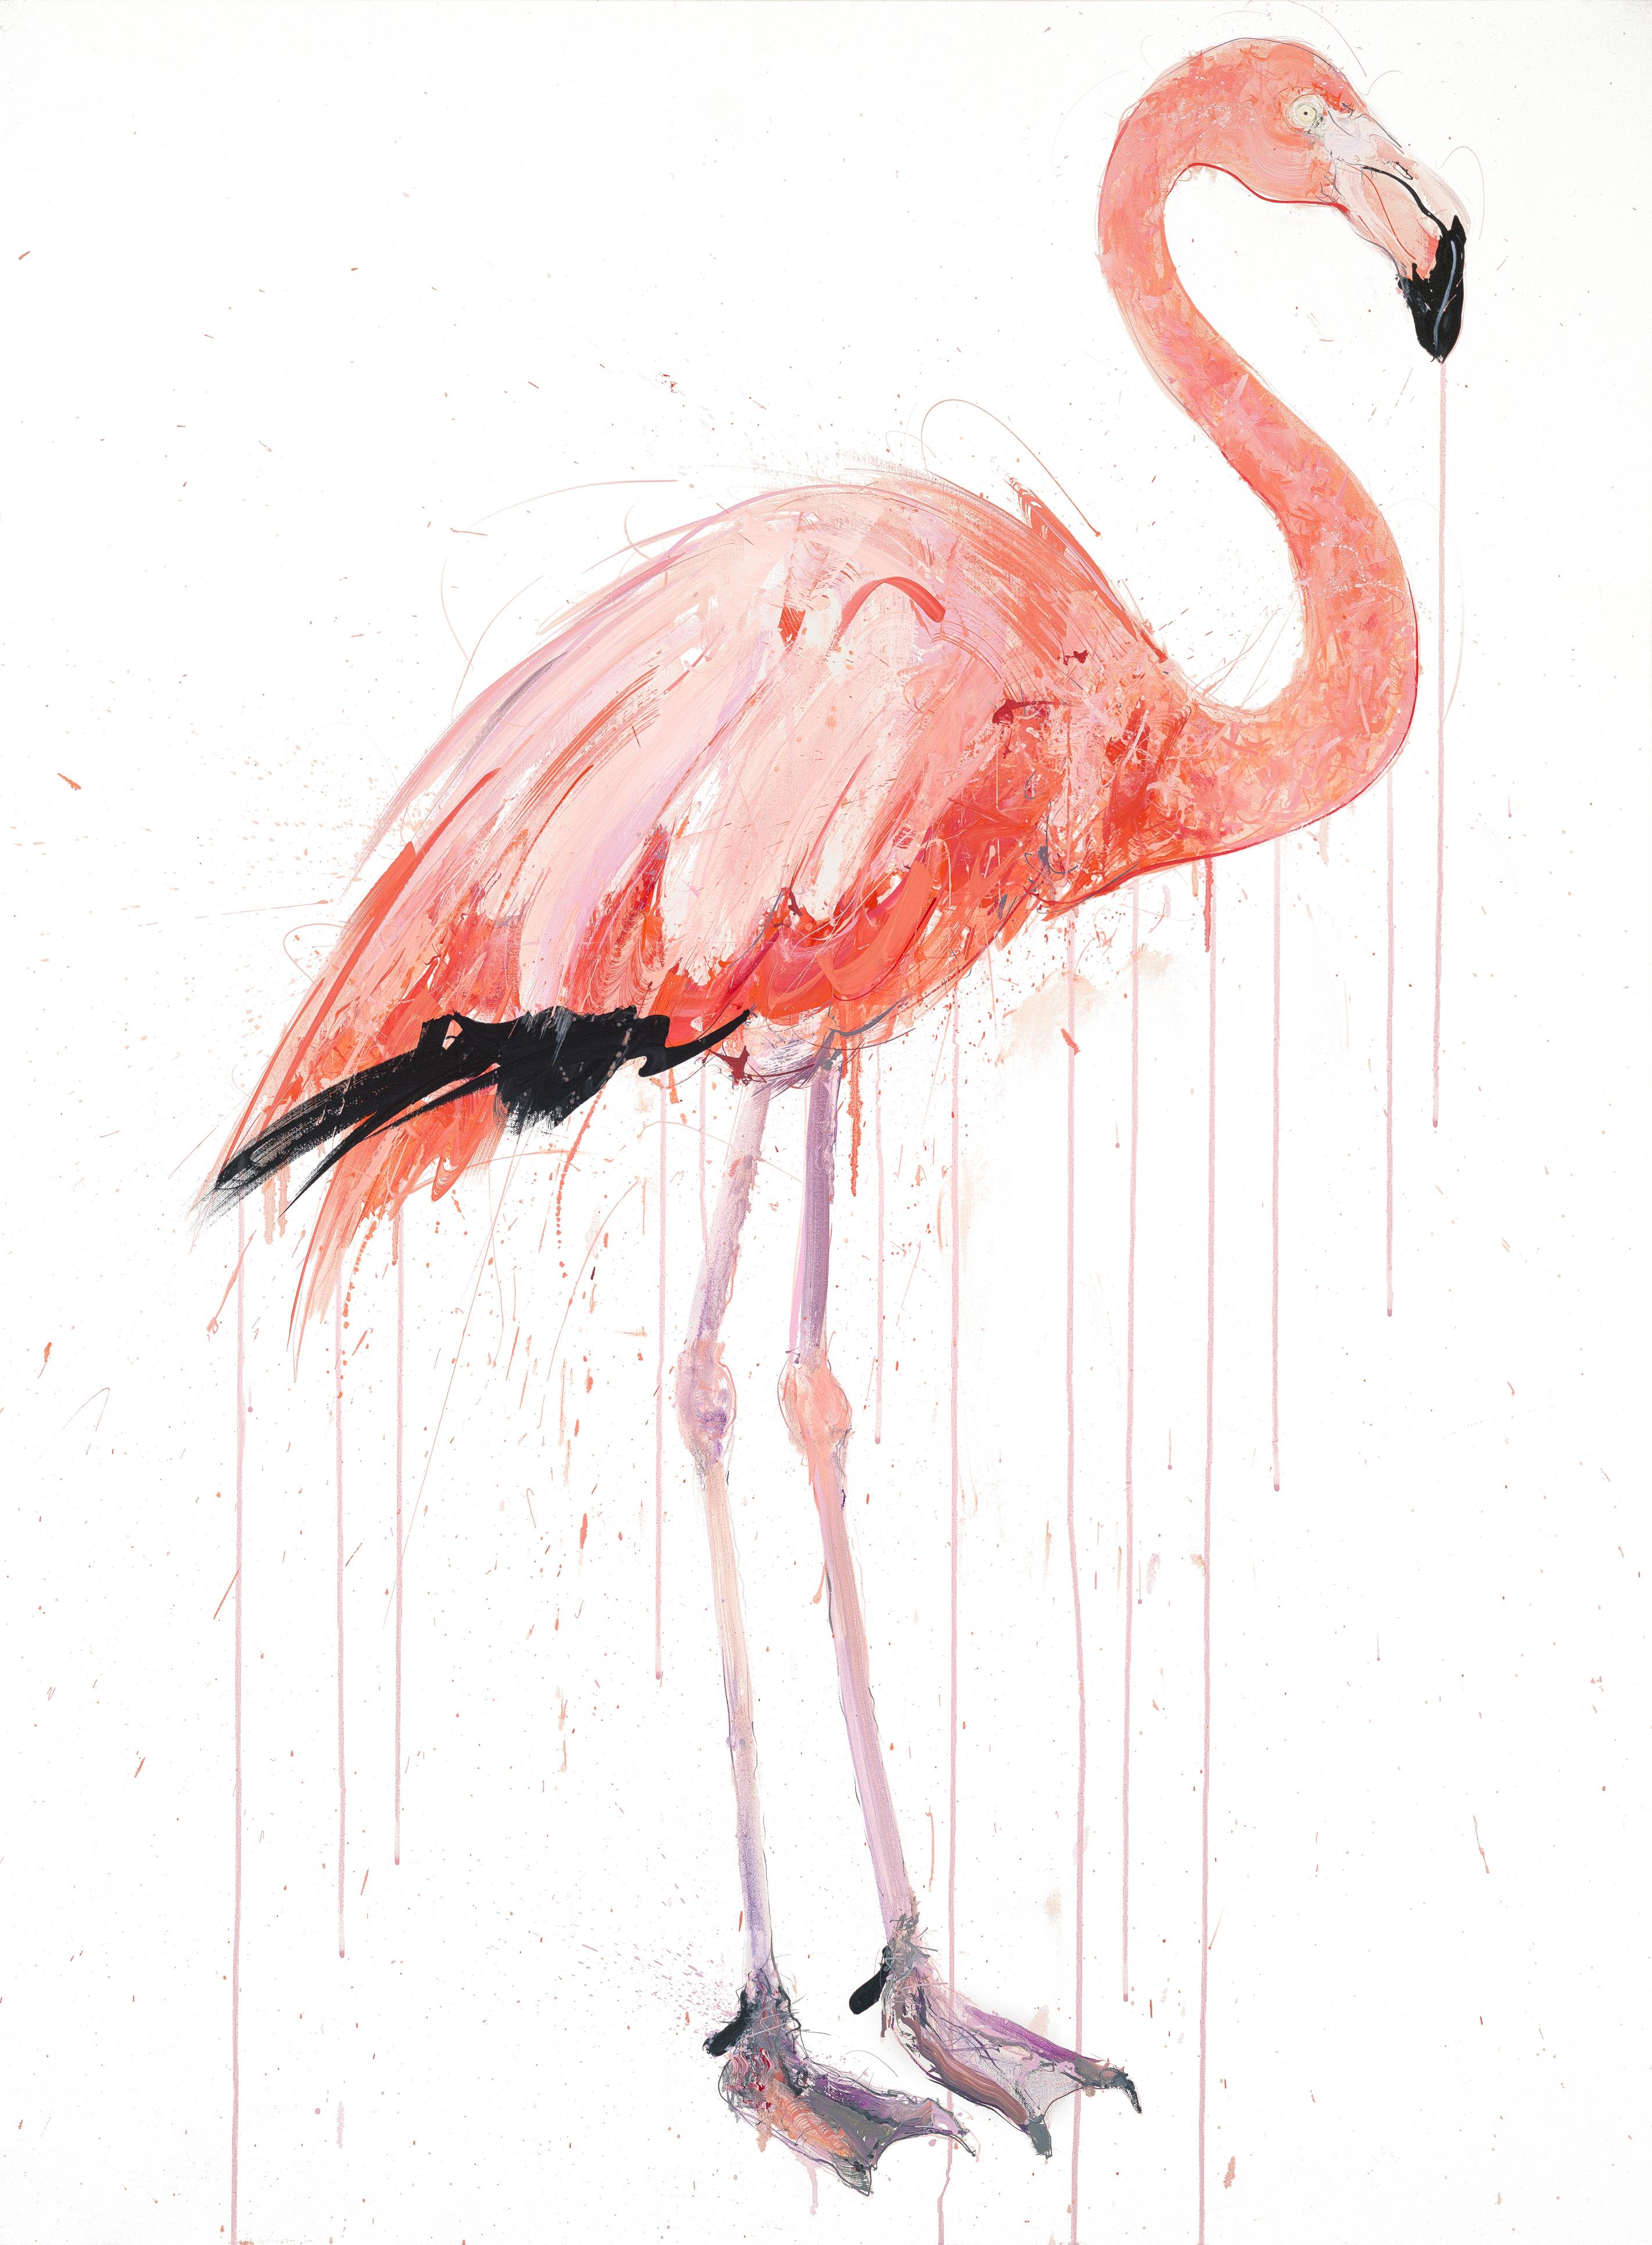 Dave White Figurative Painting - Flamingo II - Original Oil on Canvas